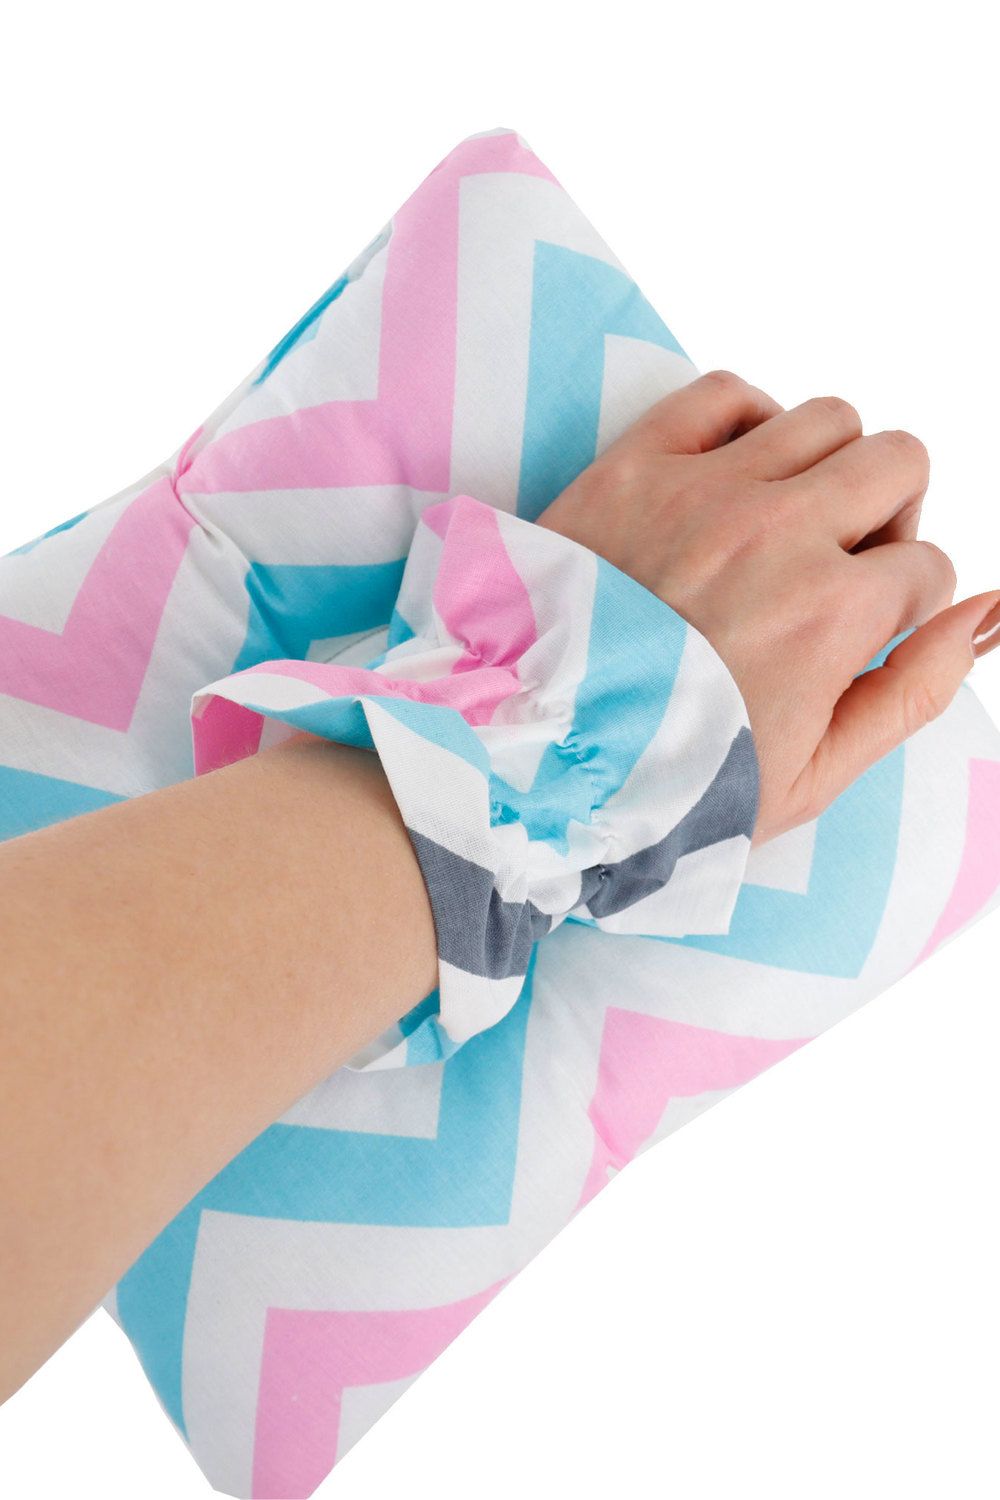 Подушка для кормления ребенка на манжете ПКР/зигзаг-голубой